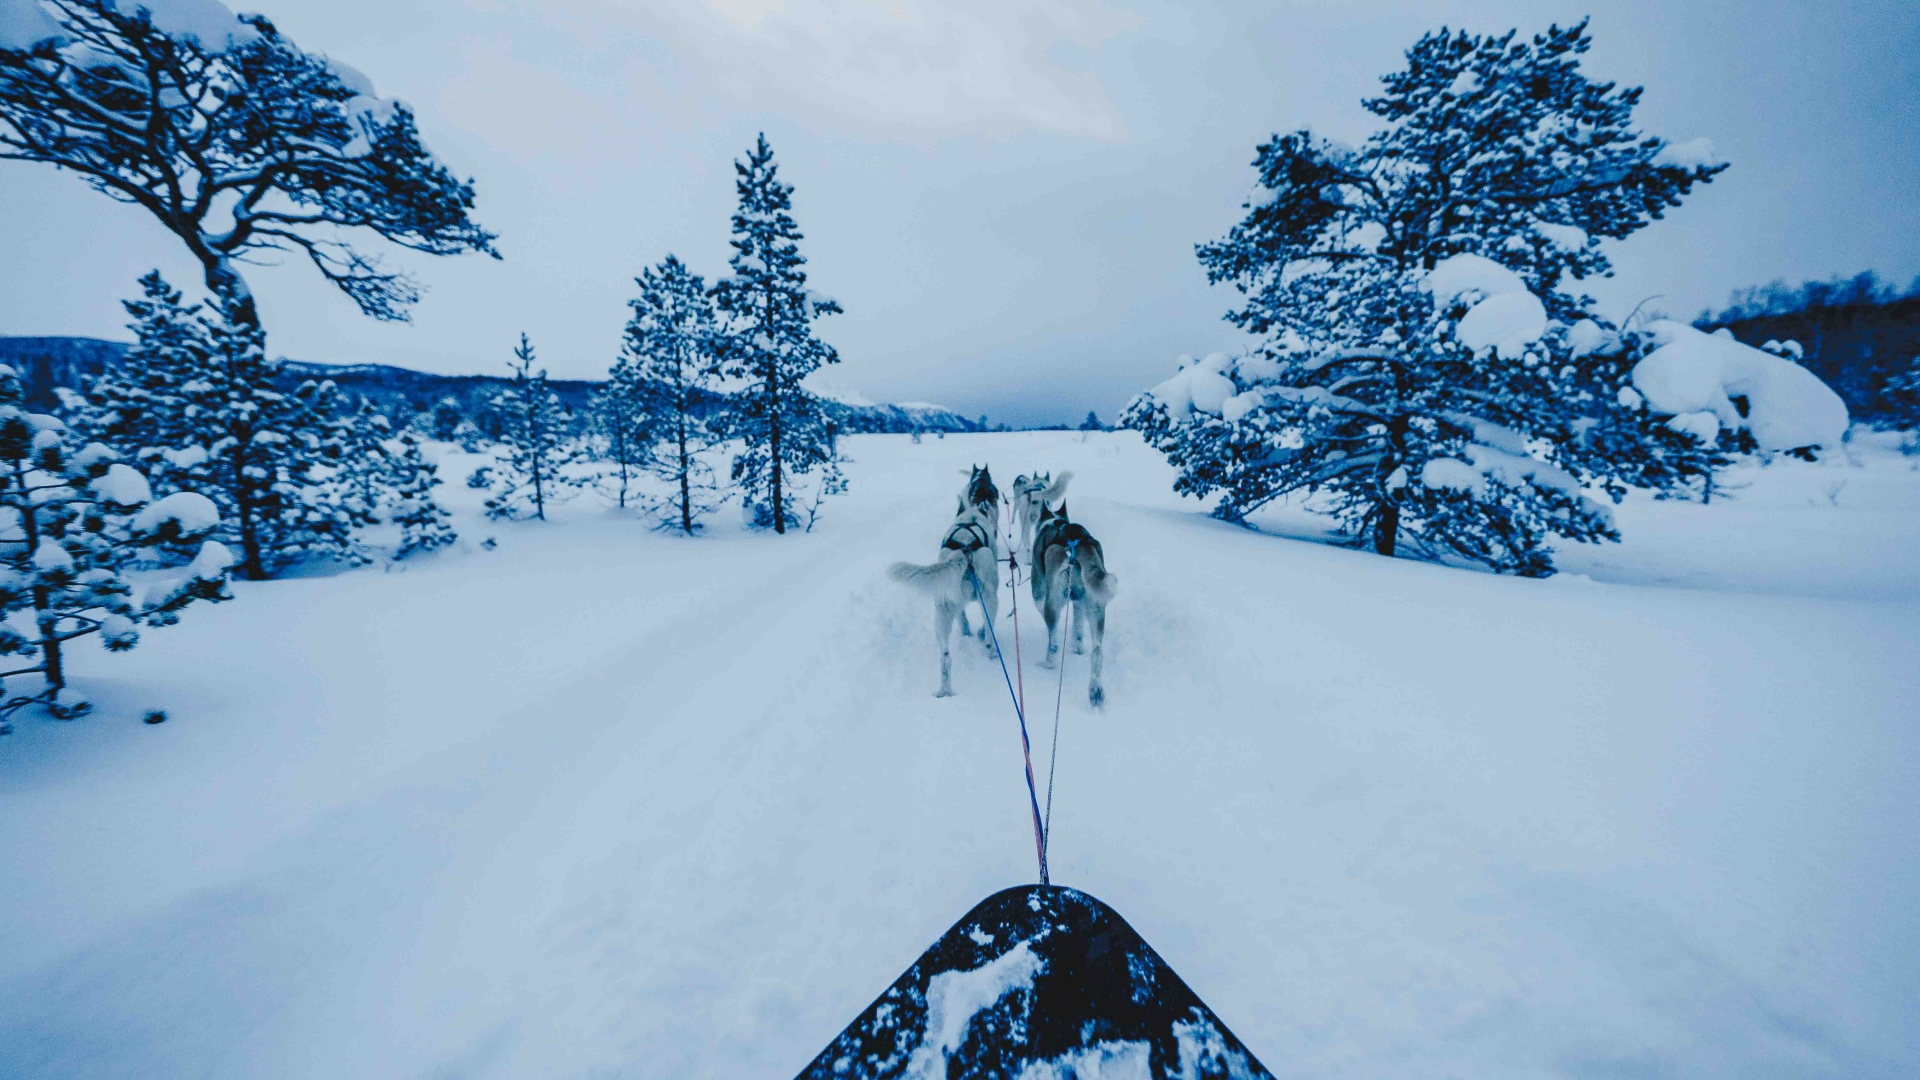 Dog sledding in winter landscape